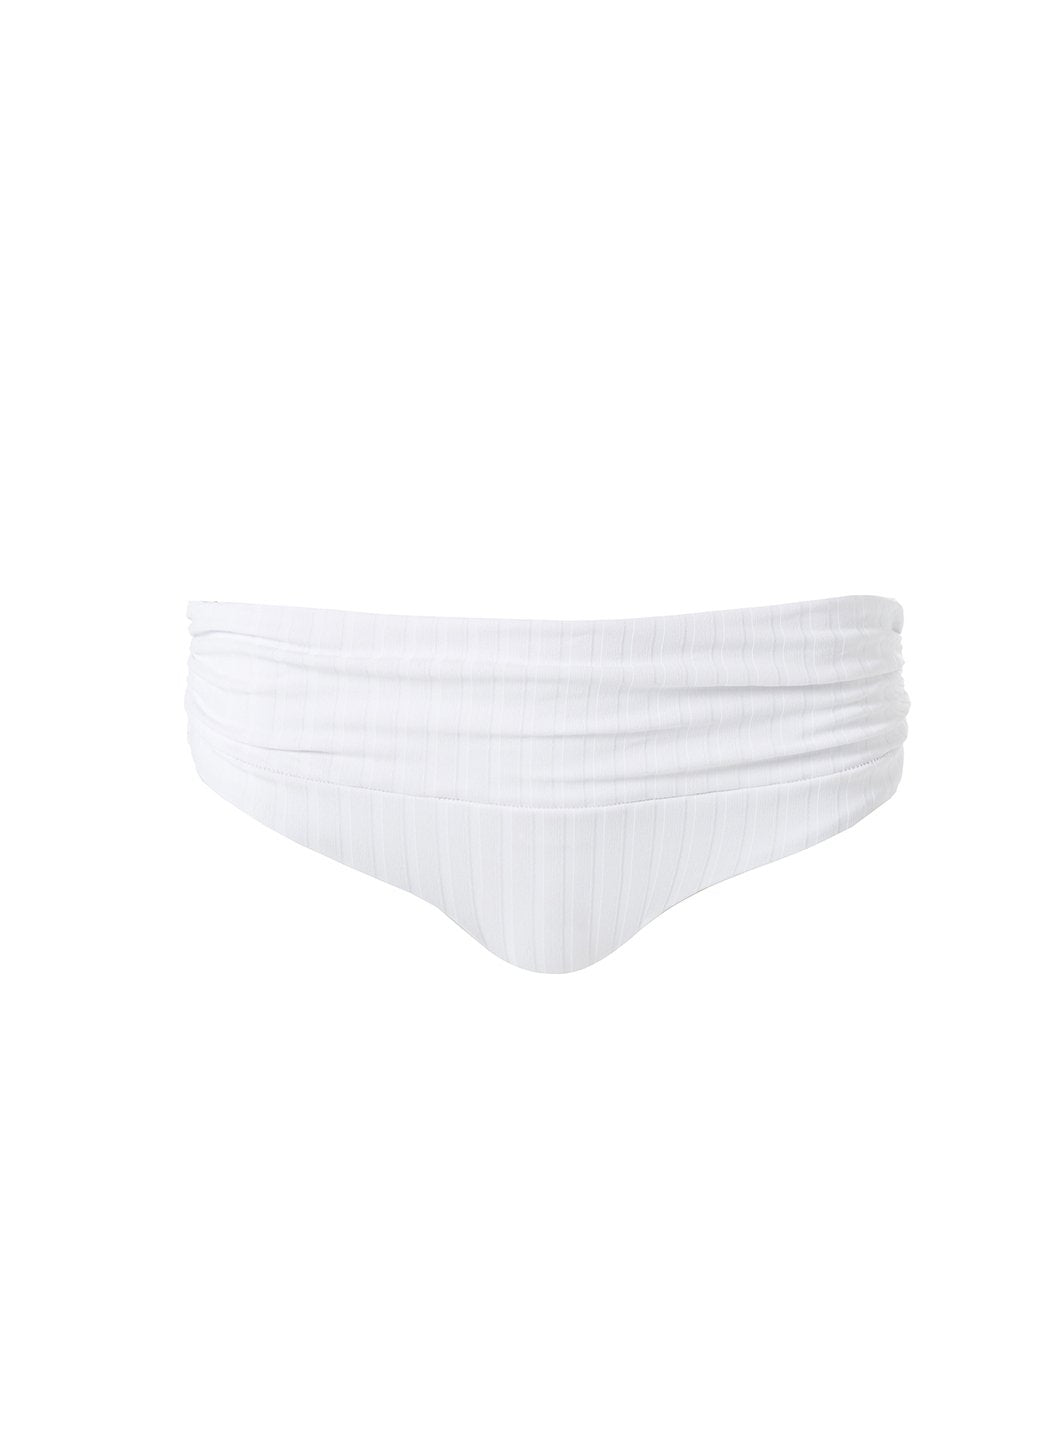 Bel Air Ribbed White Bikini Bottom